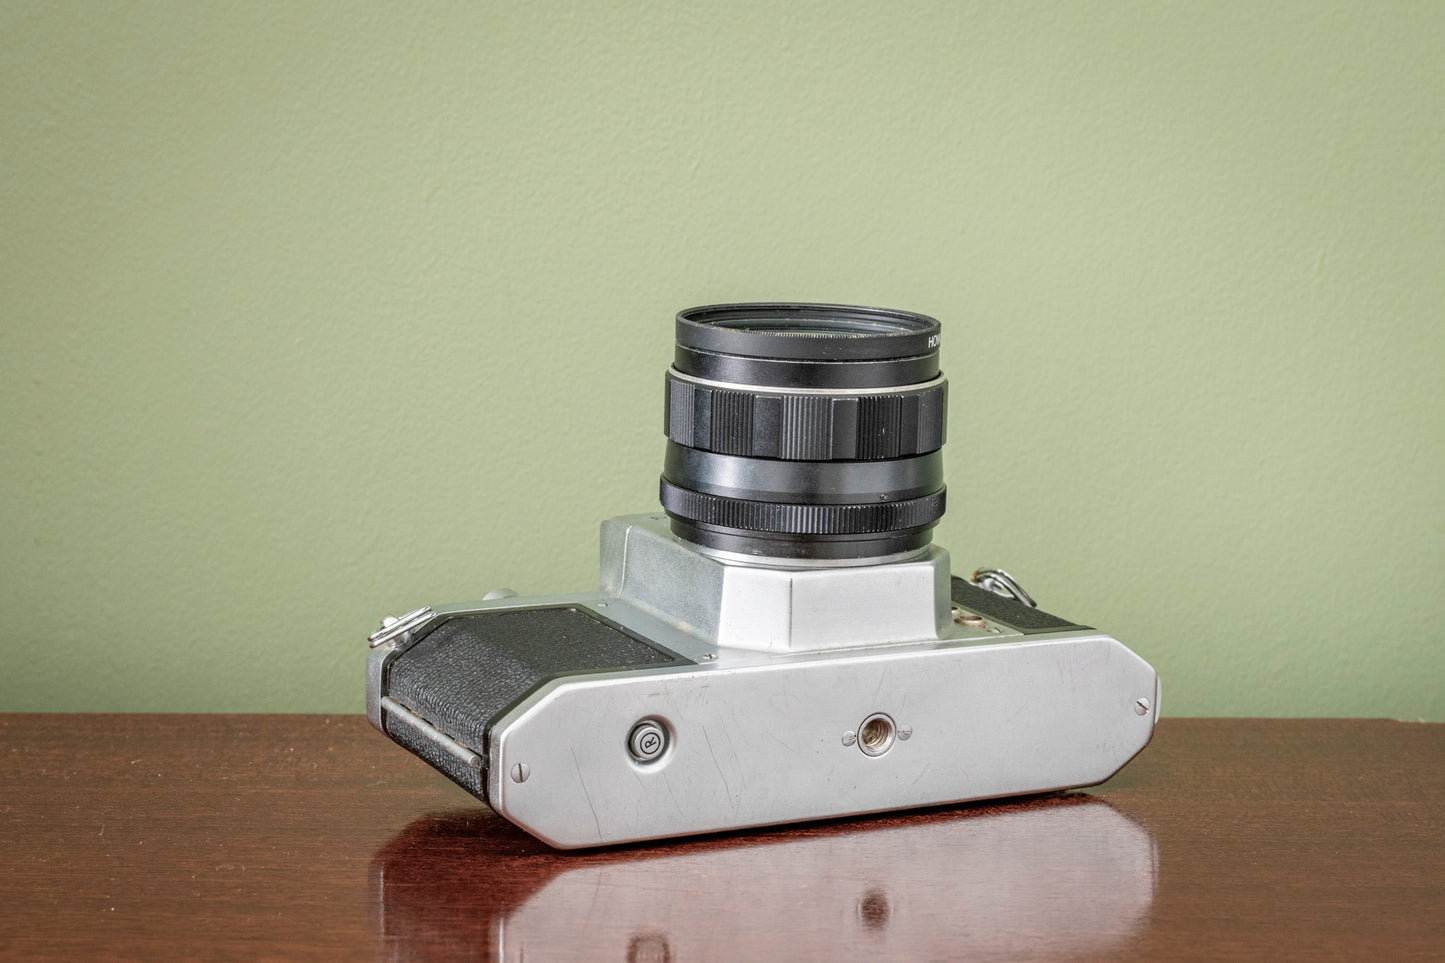 RARE 1960s Honeywell Pentax H3 35mm SLR Film Camera + ASAHI Auto-Takumar F1.8 55mm Lens